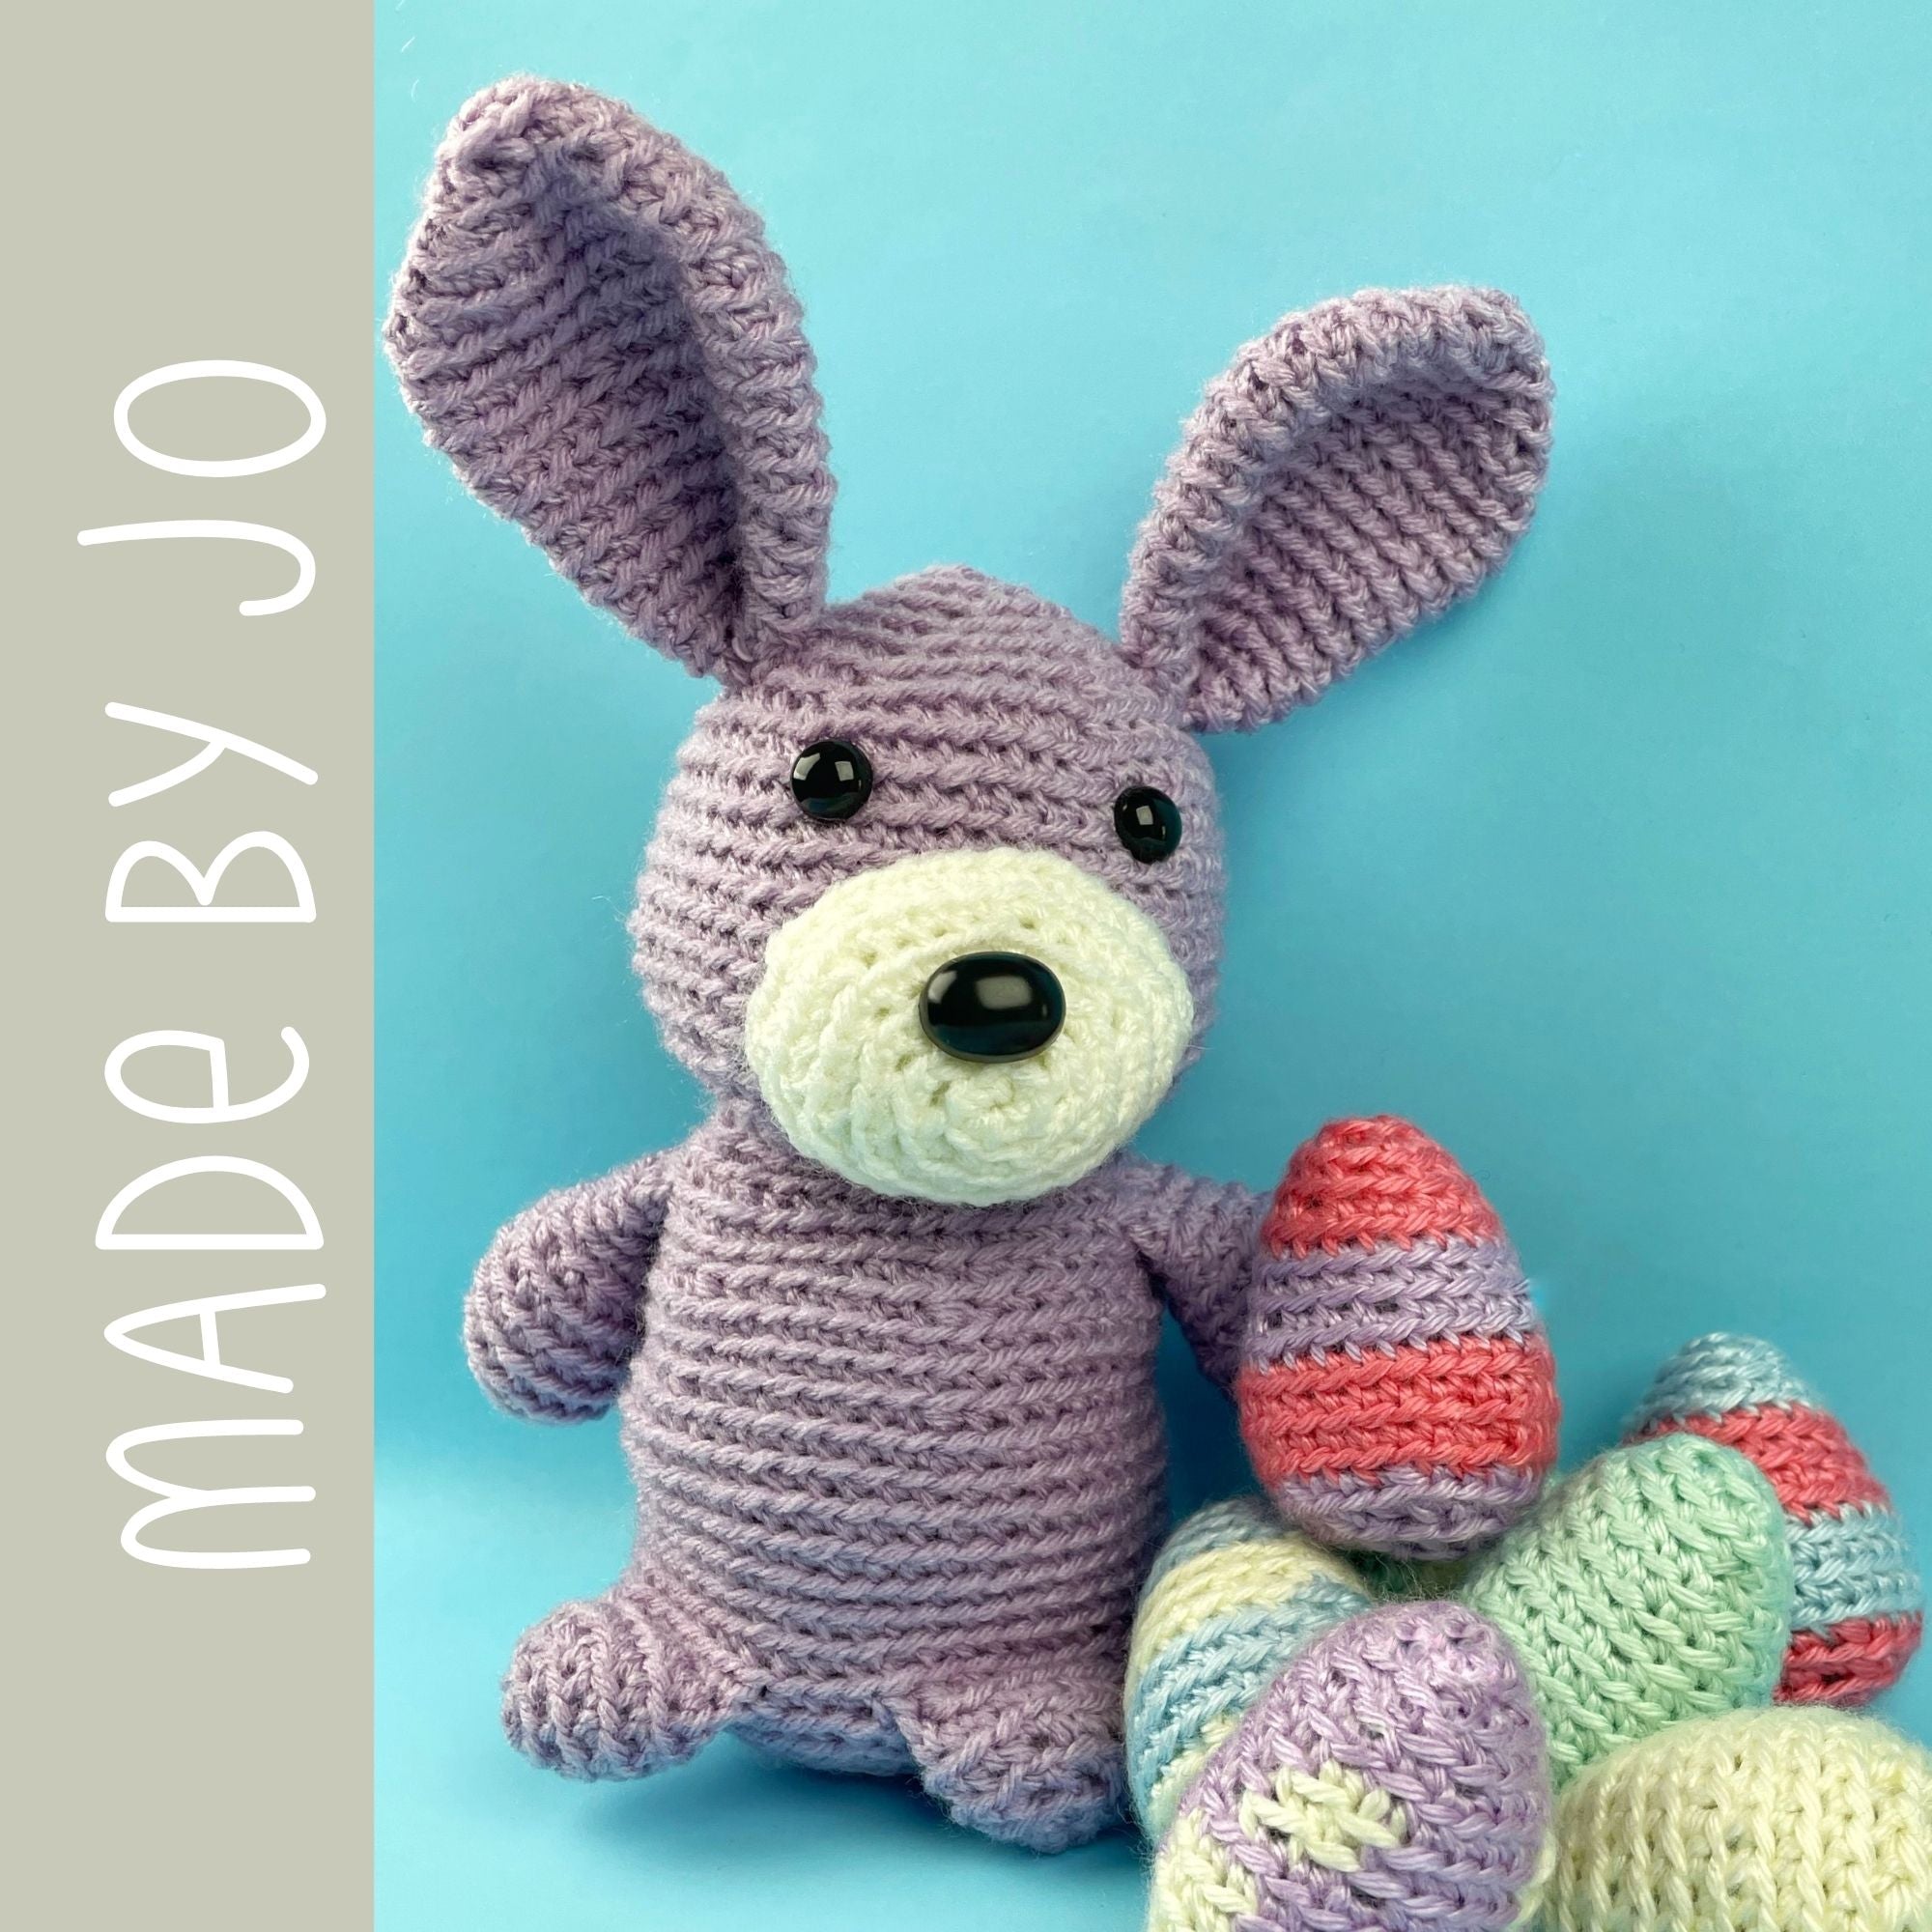 Amigurumi cuties pattern, Crochet bunny, puppy and teddy